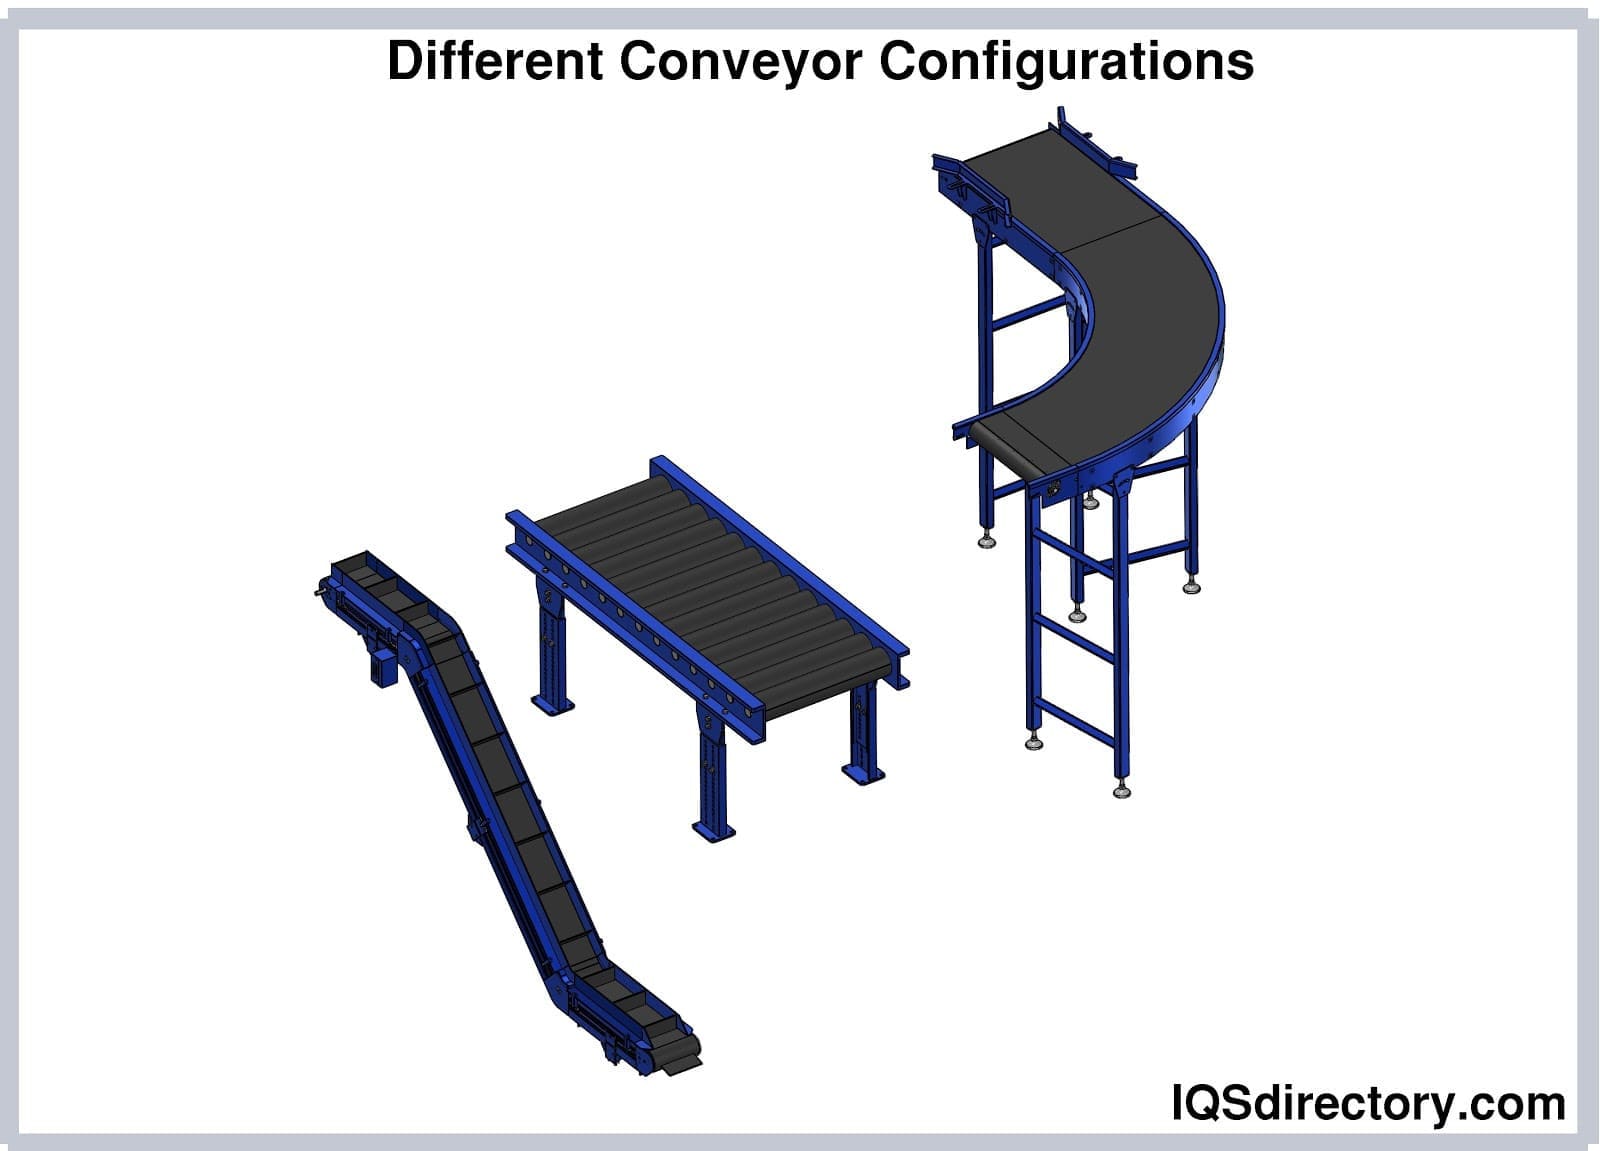 Different Conveyor Configurations